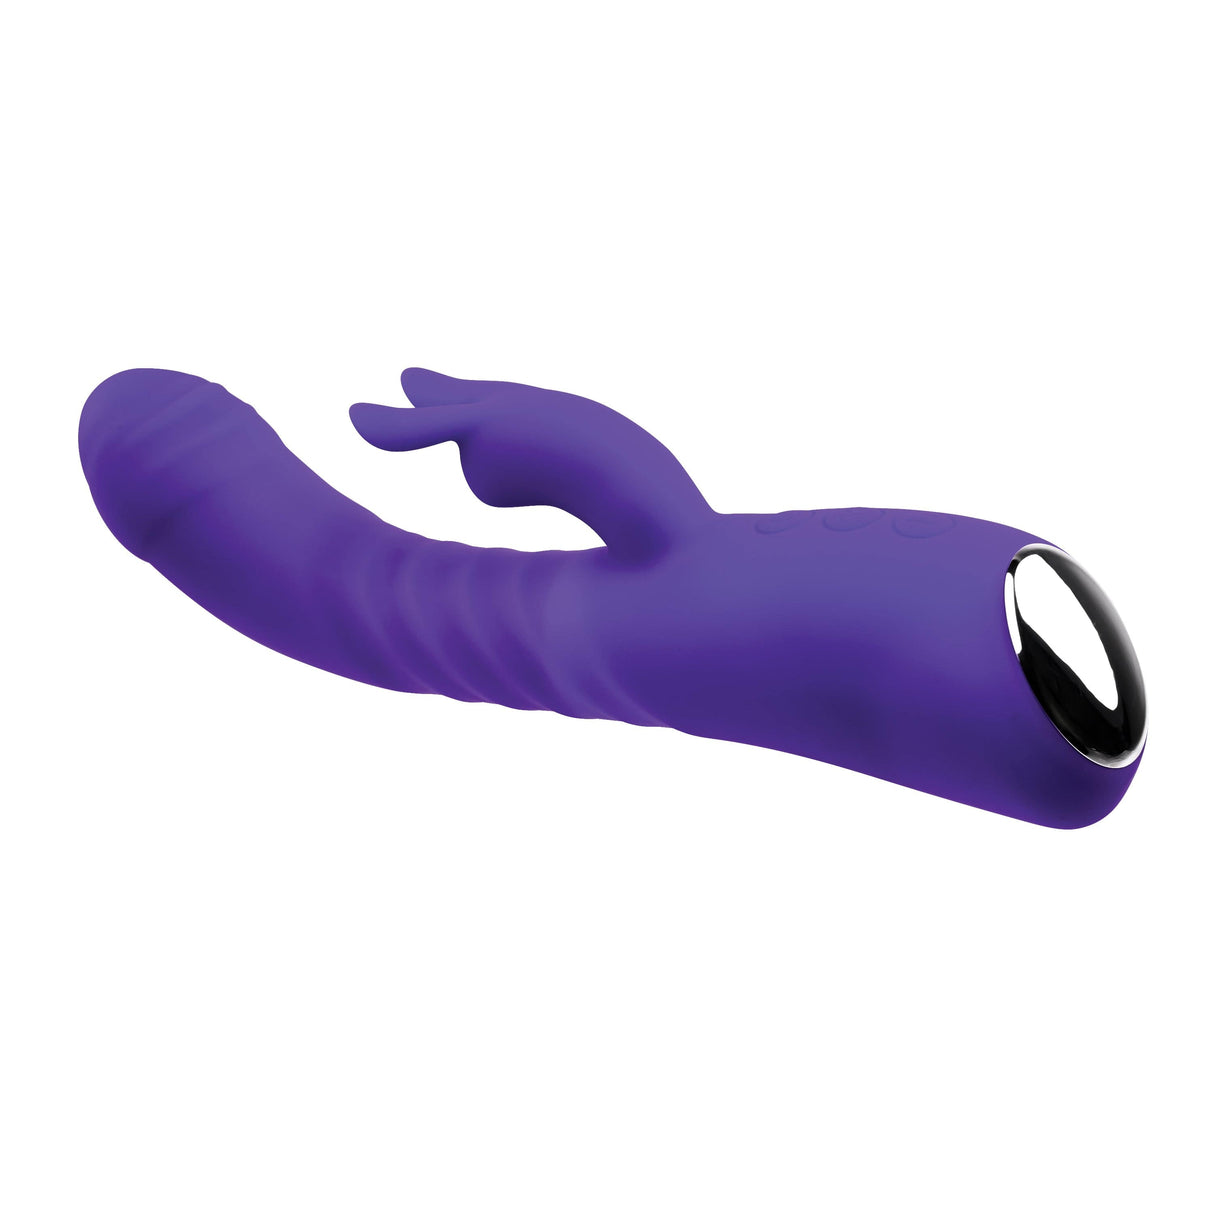 Adam & Eve - Eve's Posh Thrusting Warming Rabbit Vibrator (Purple)    Rabbit Dildo (Vibration) Rechargeable